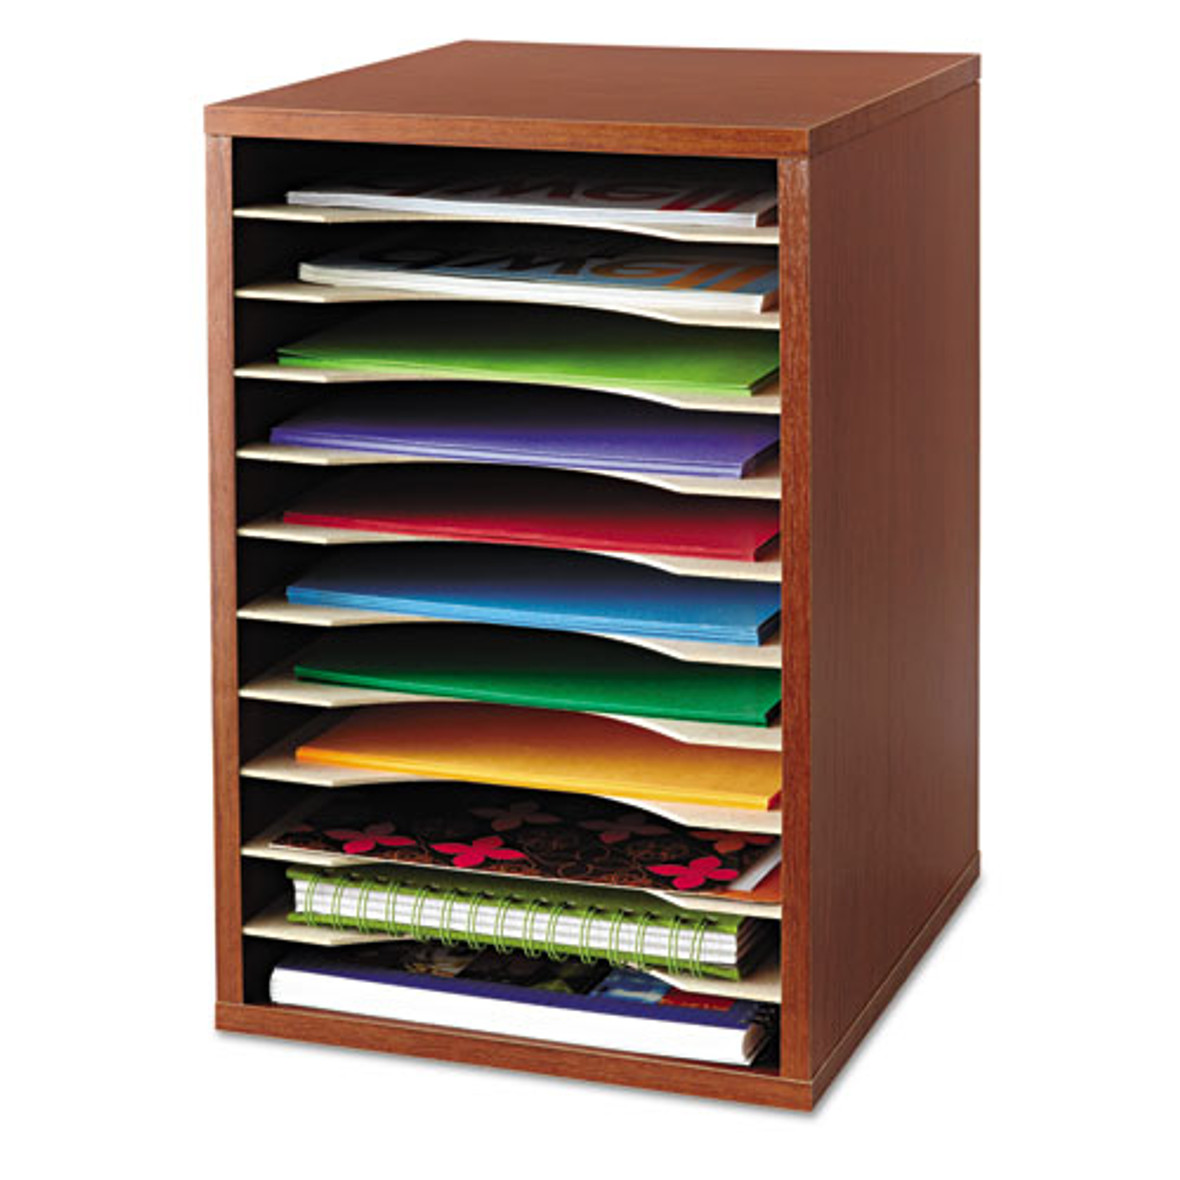 Safco® Wood Desktop Literature Sorter, 11 Sections 10 5/8 x 11 7/8 x 16, Cherry